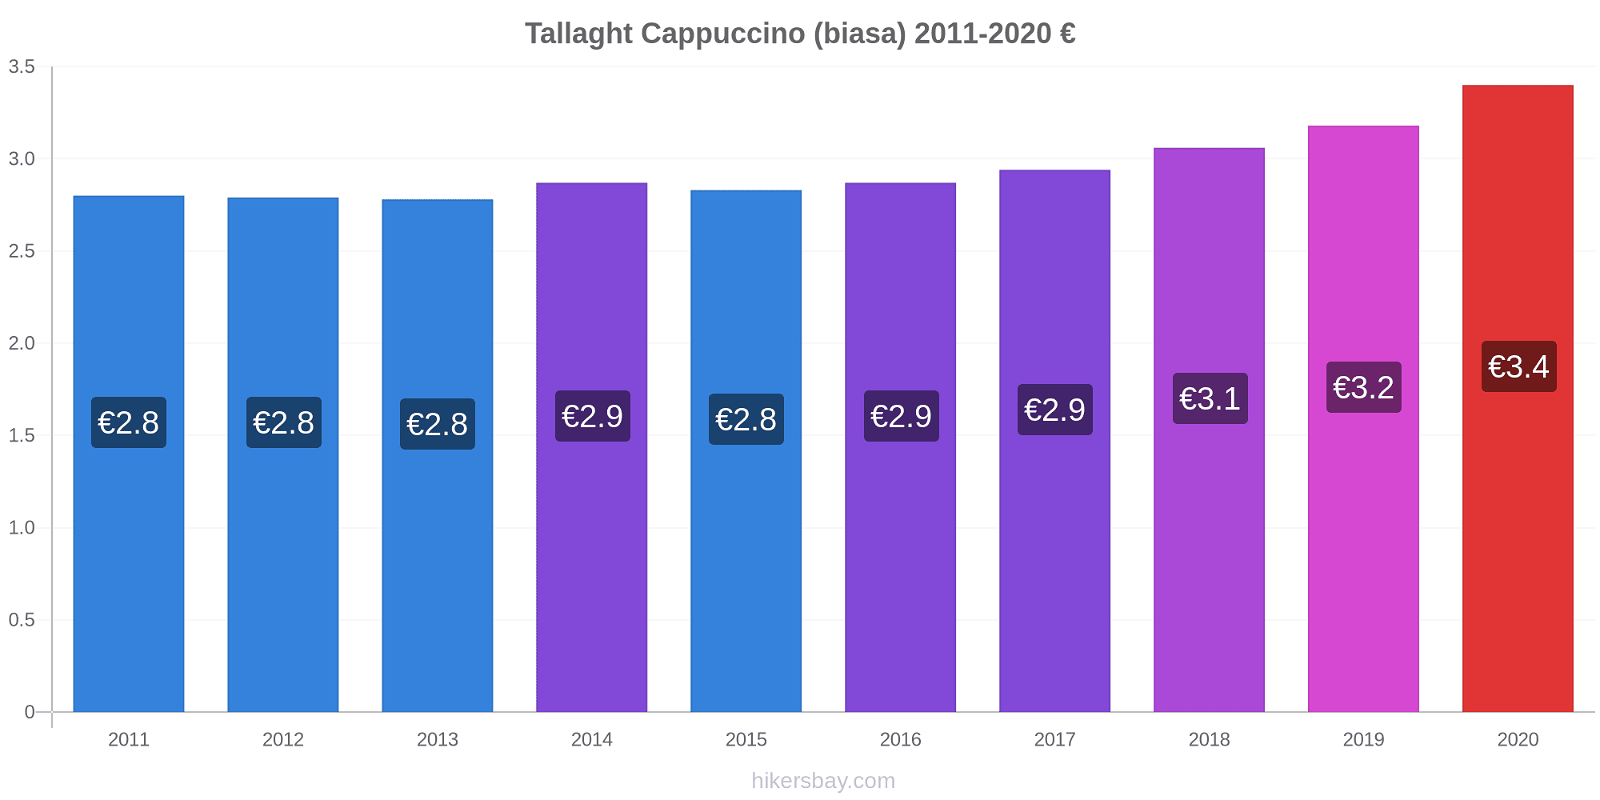 Tallaght perubahan harga Cappuccino (biasa) hikersbay.com